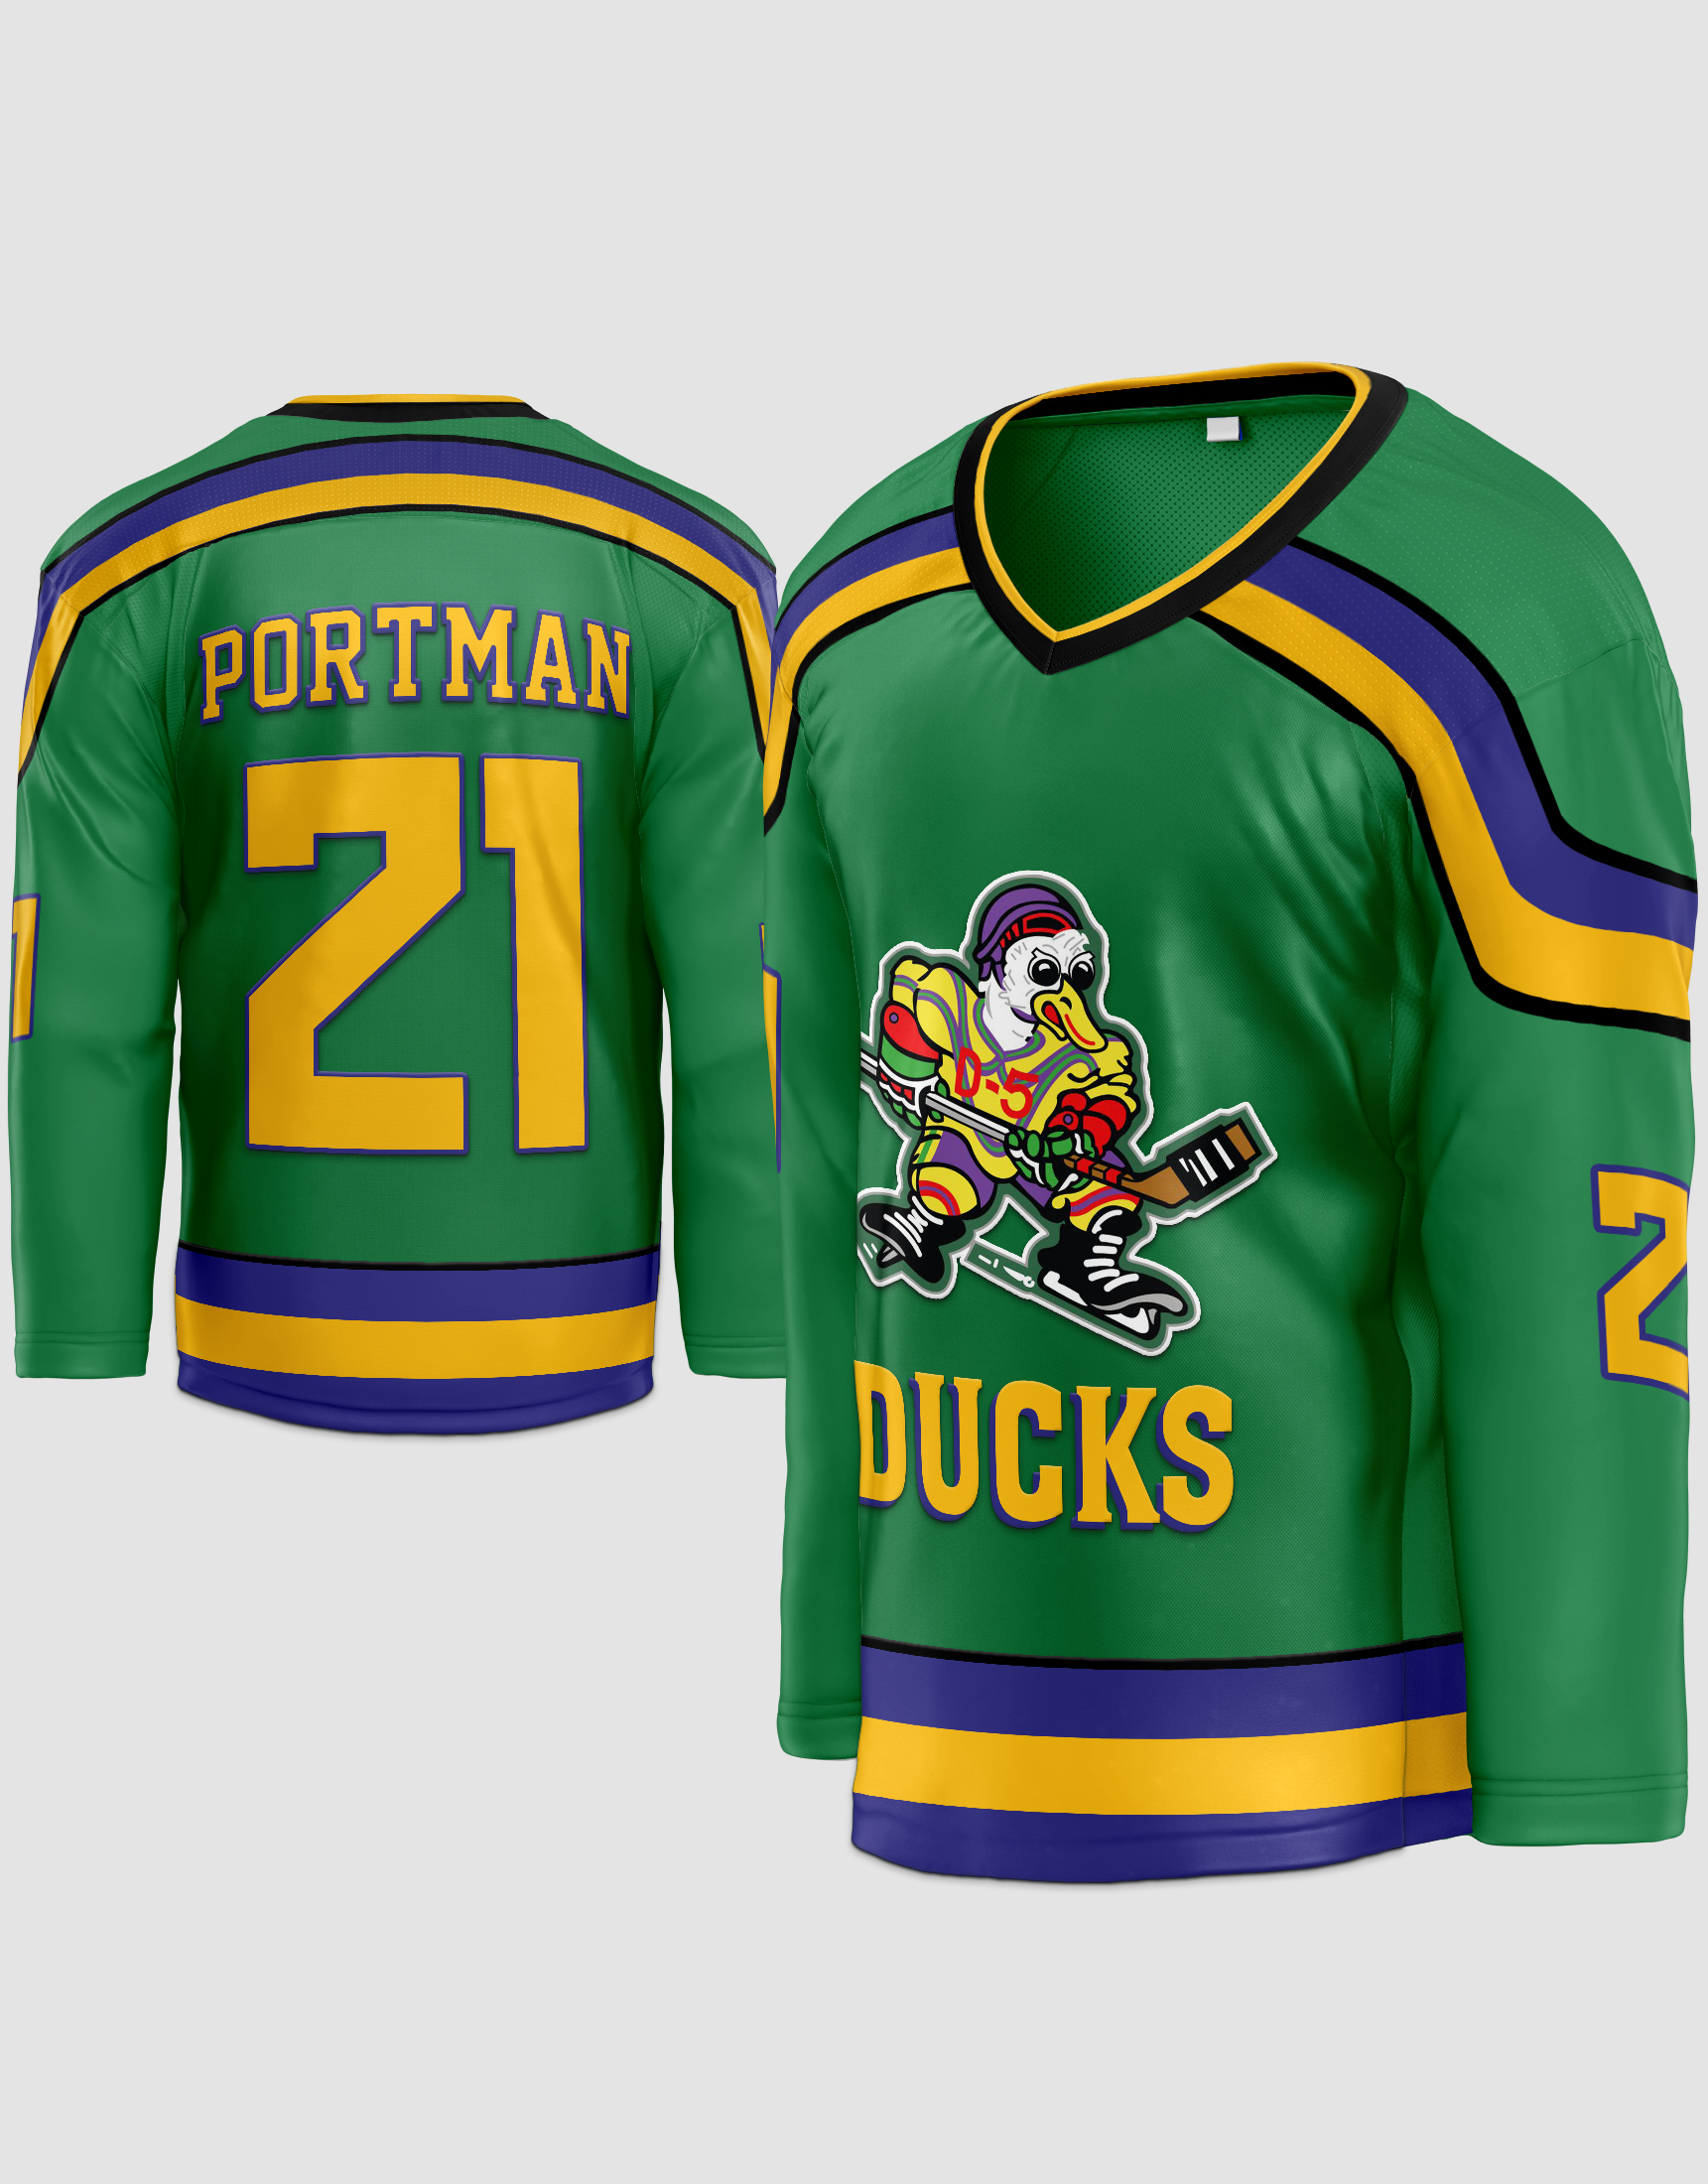 Youth Dean Portman 21 the Mighty Ducks Hockey Jersey all 